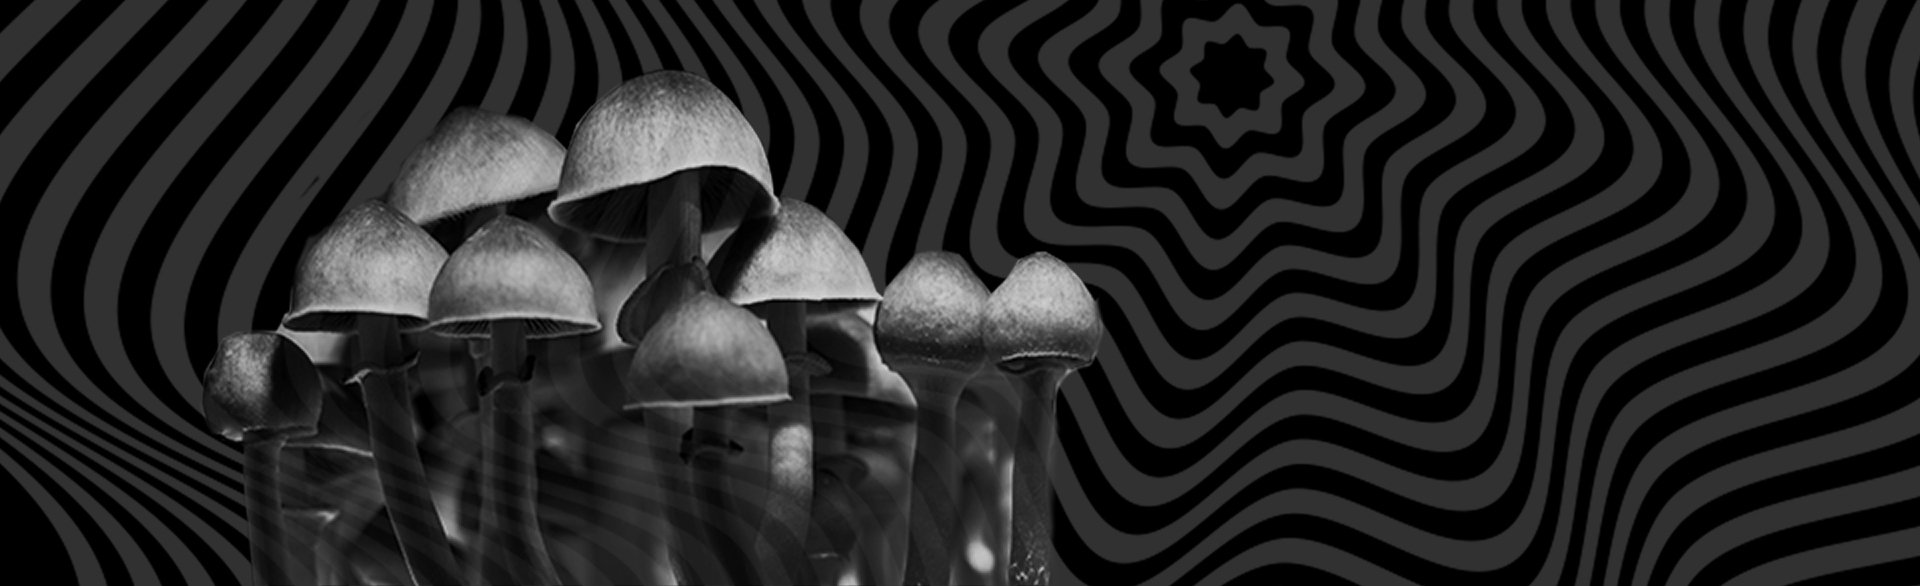 mushrooms over black and grey zigzag background